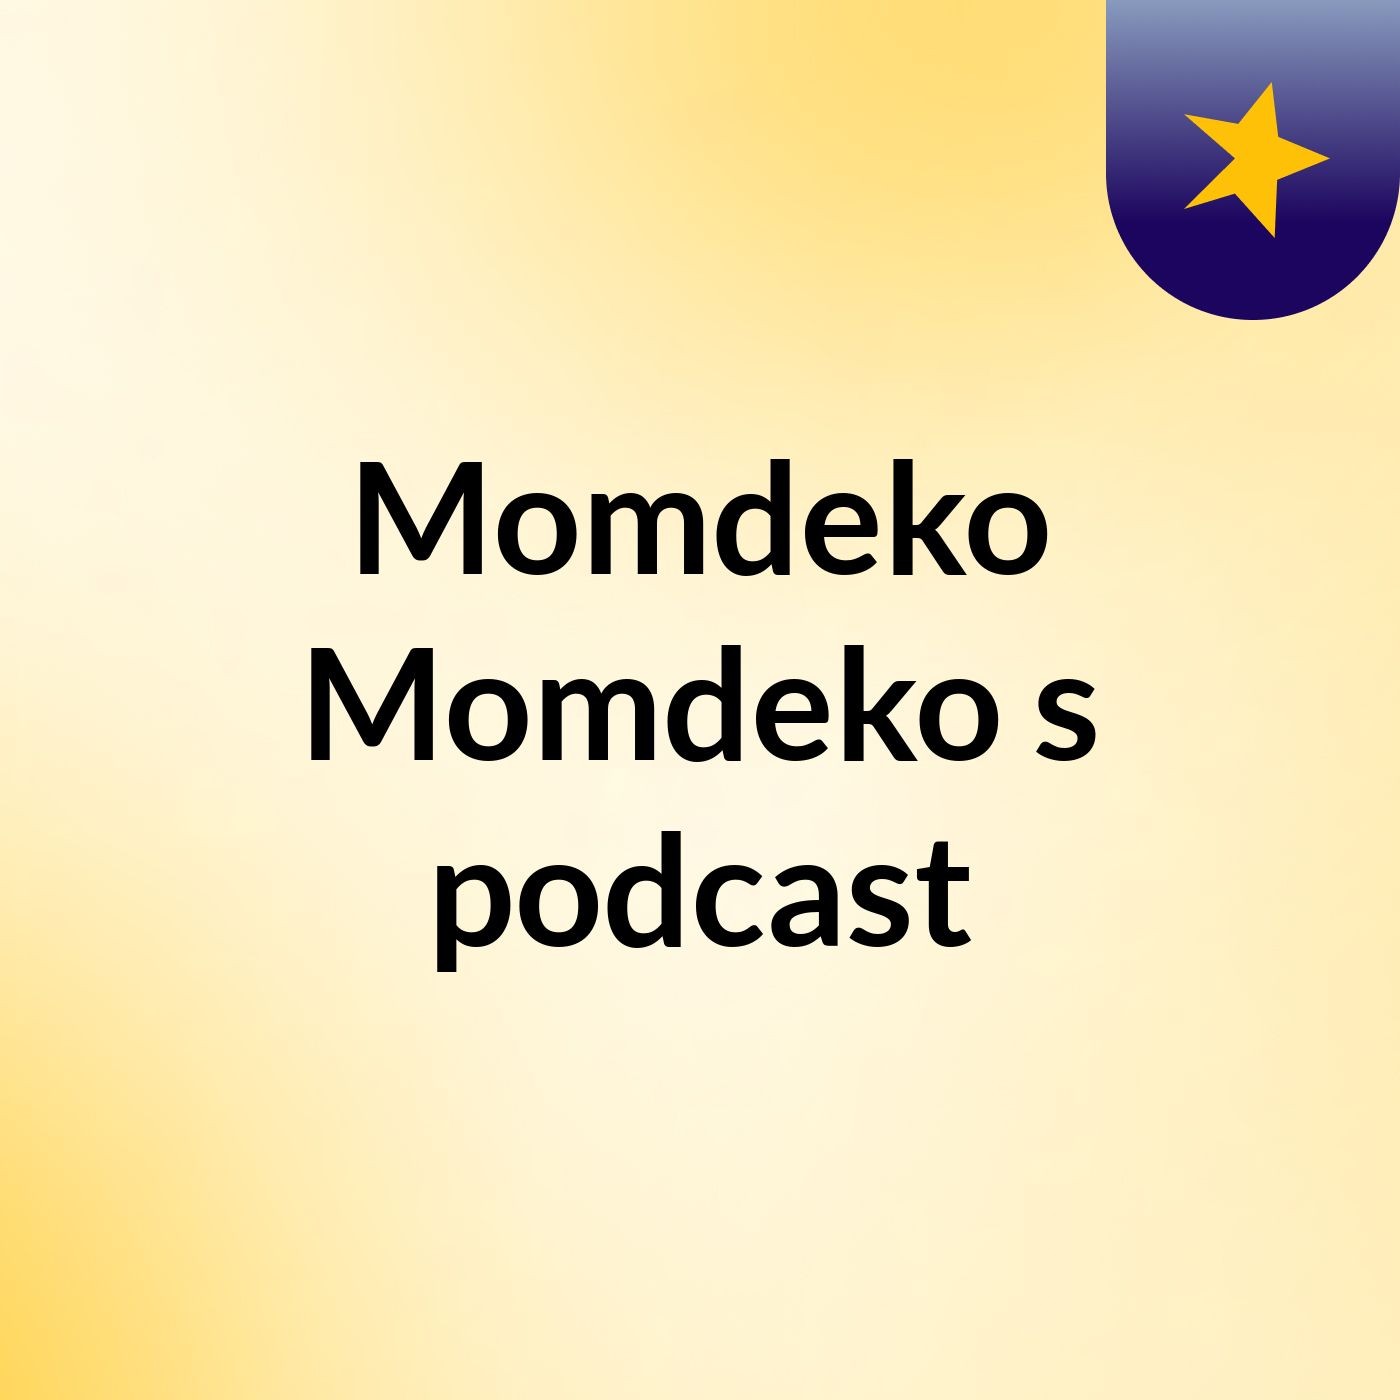 Momdeko Momdeko's podcast